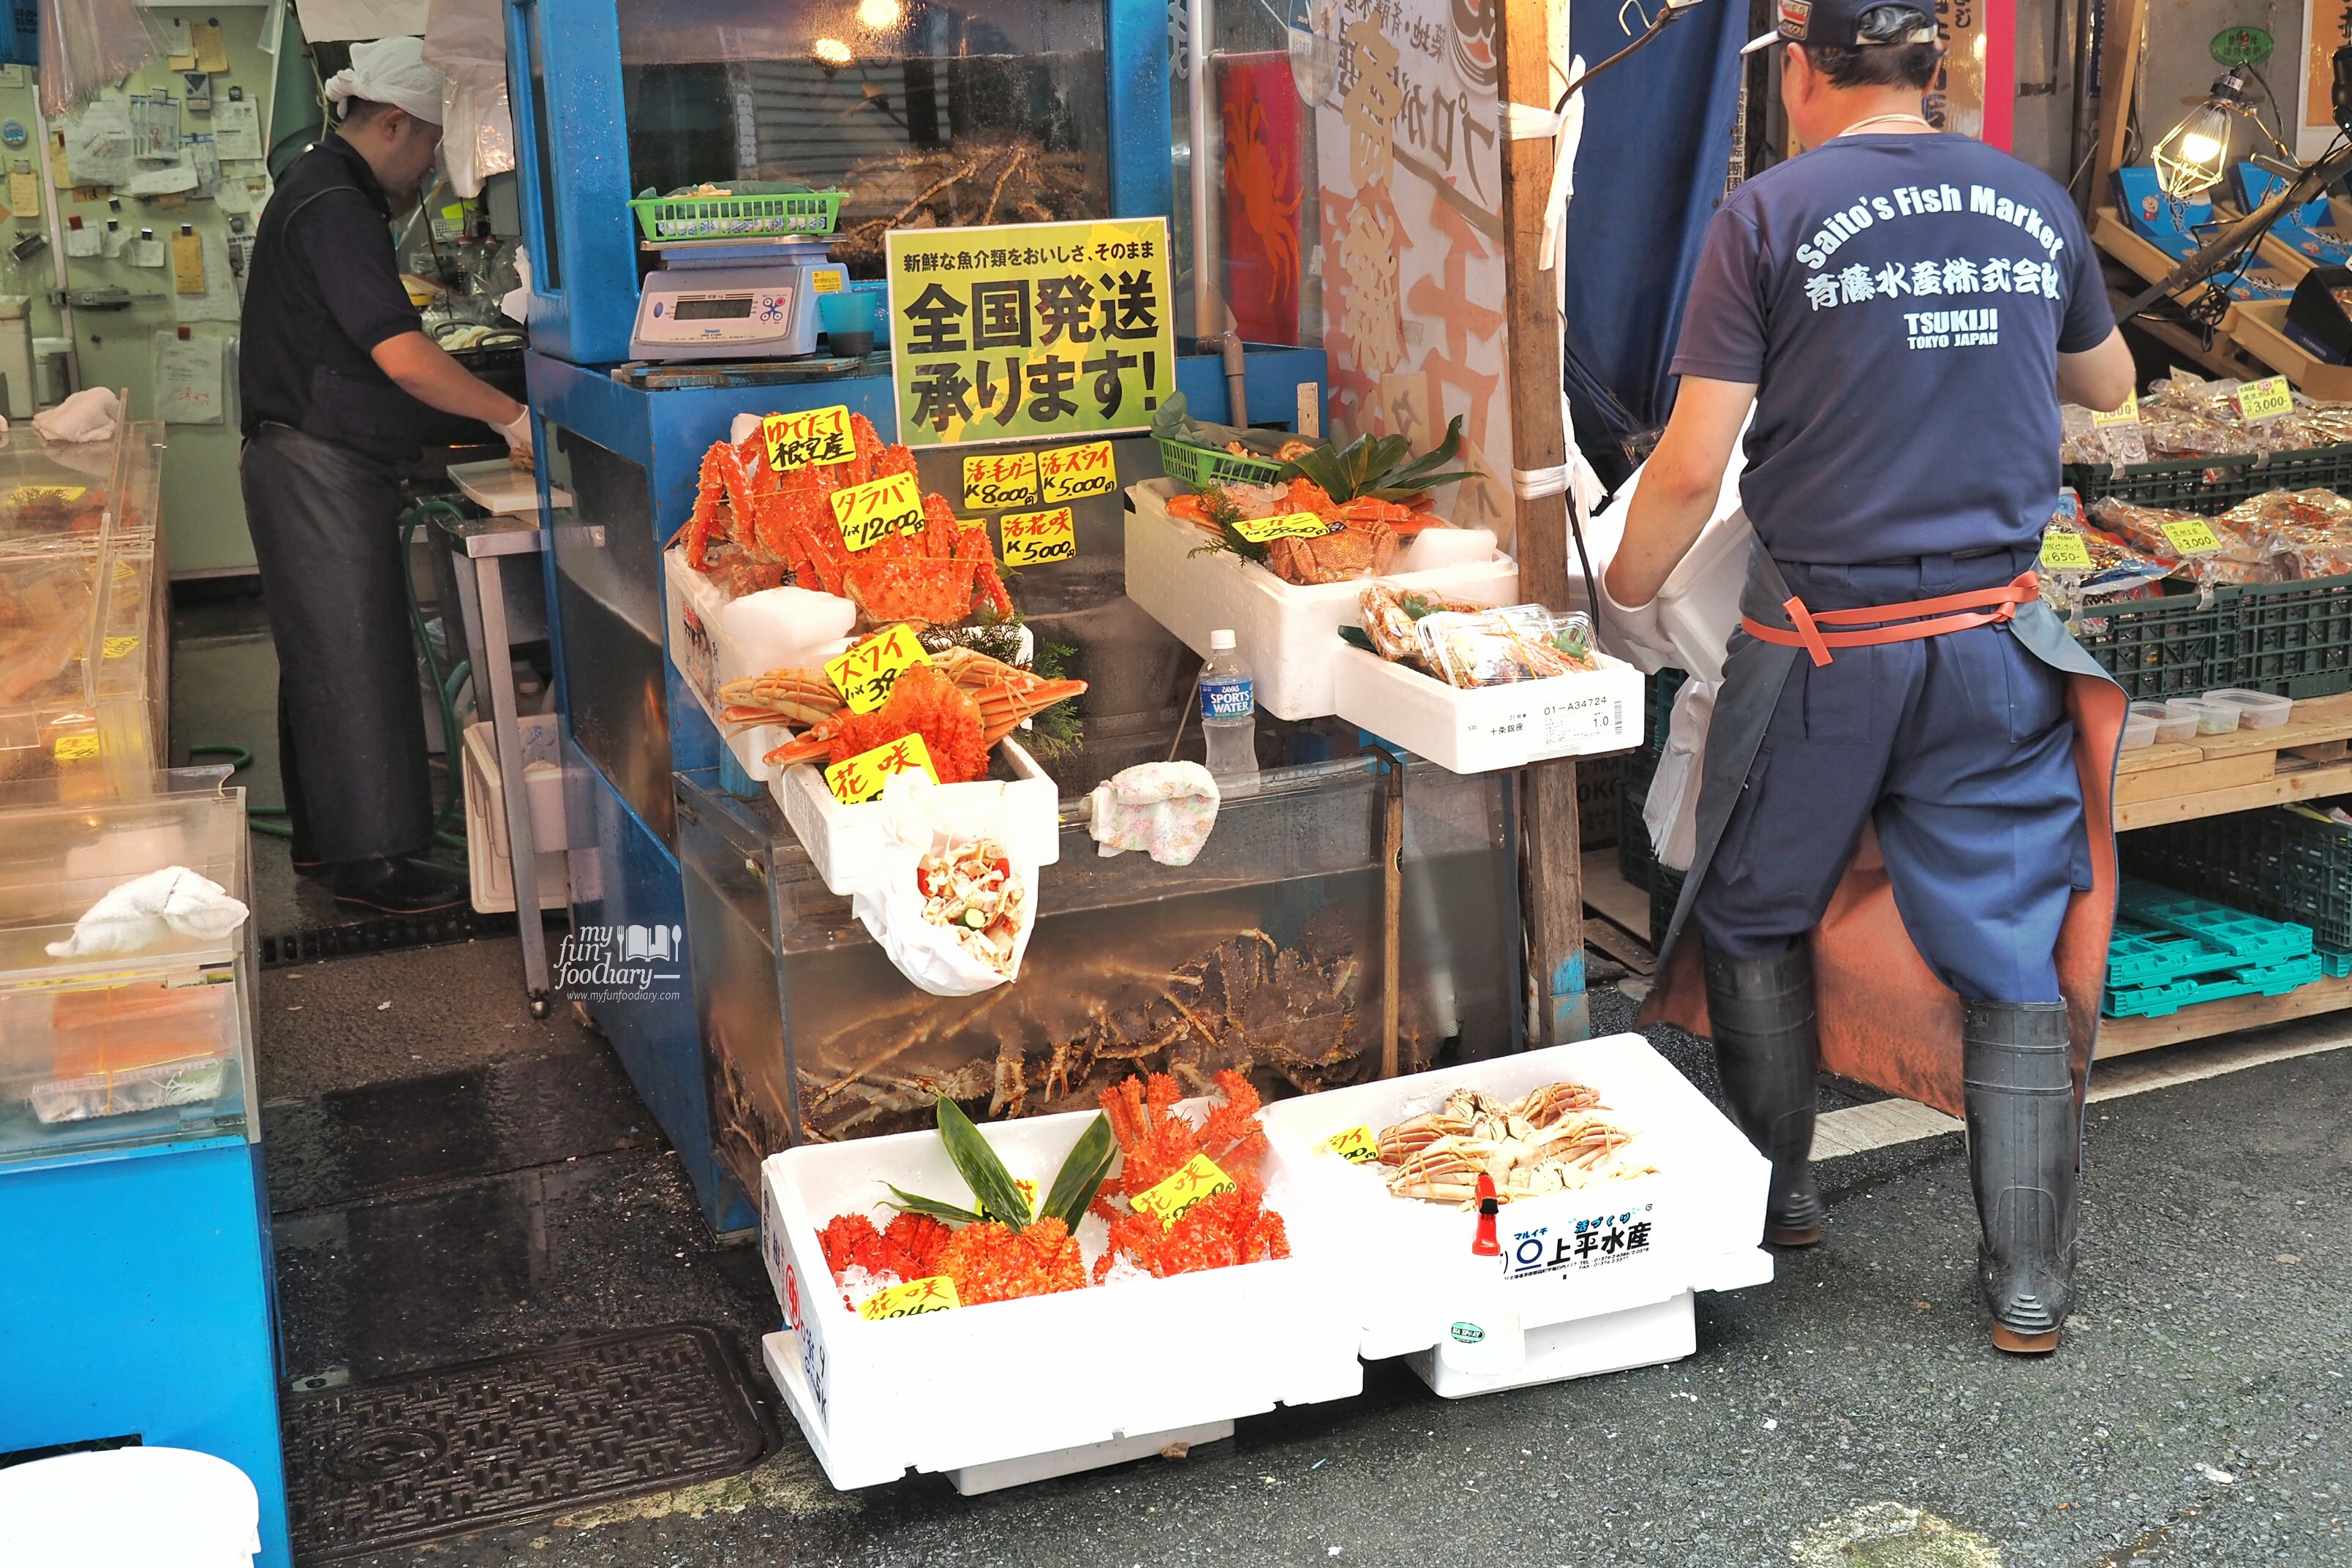 King Crab at Tsukiji Market by Myfunfoodiary